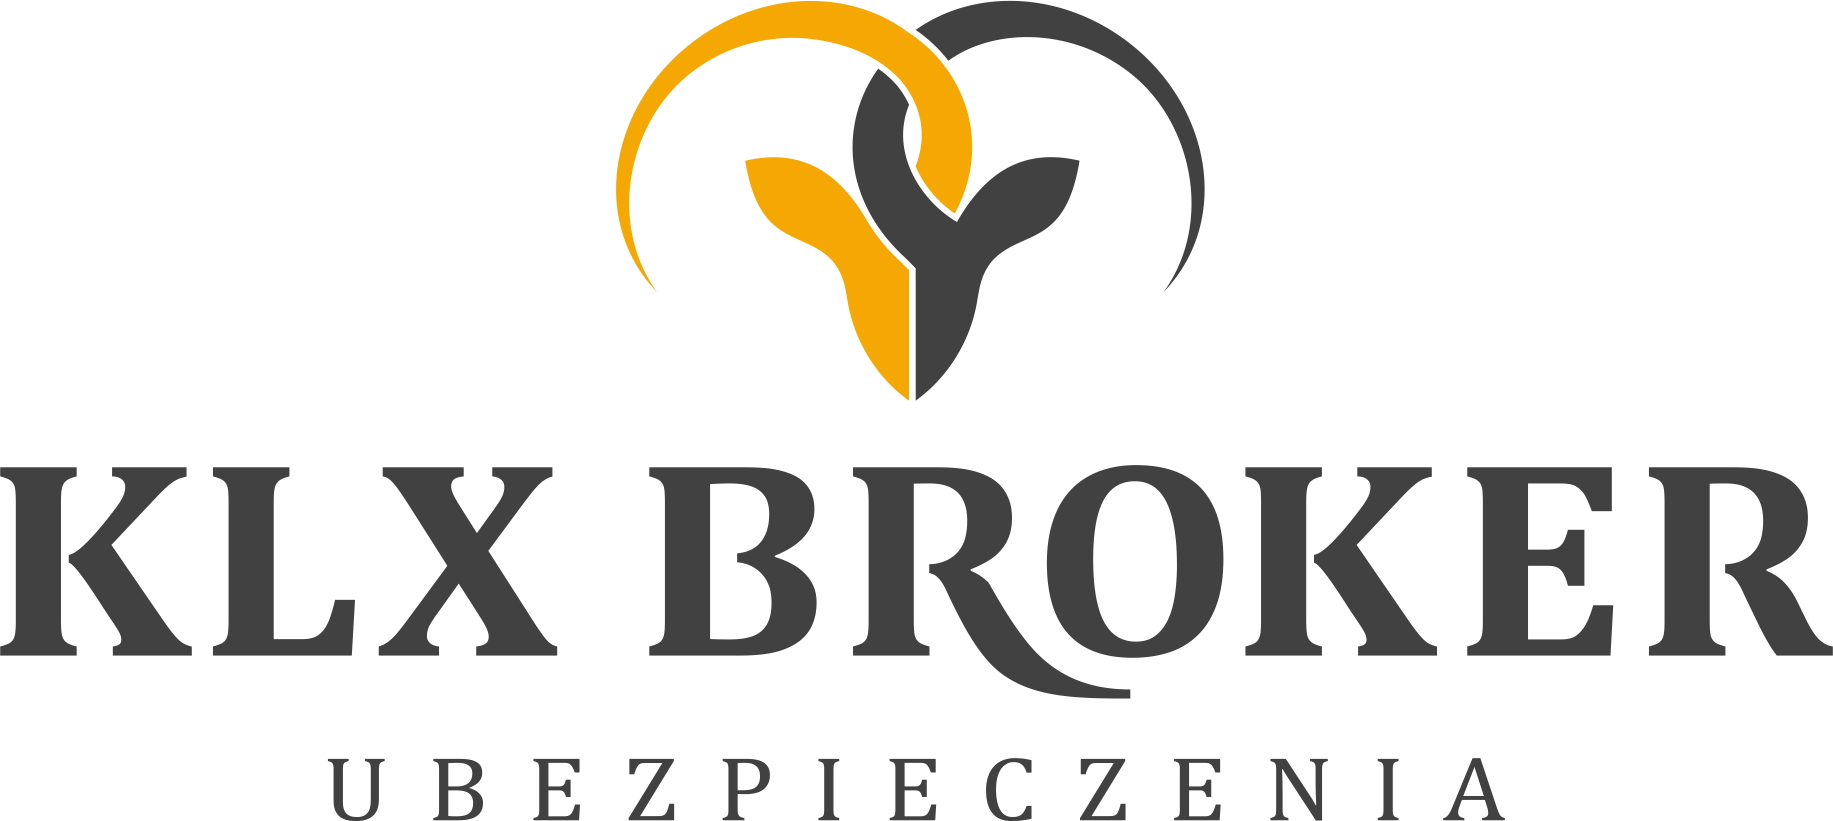 Klimex broker